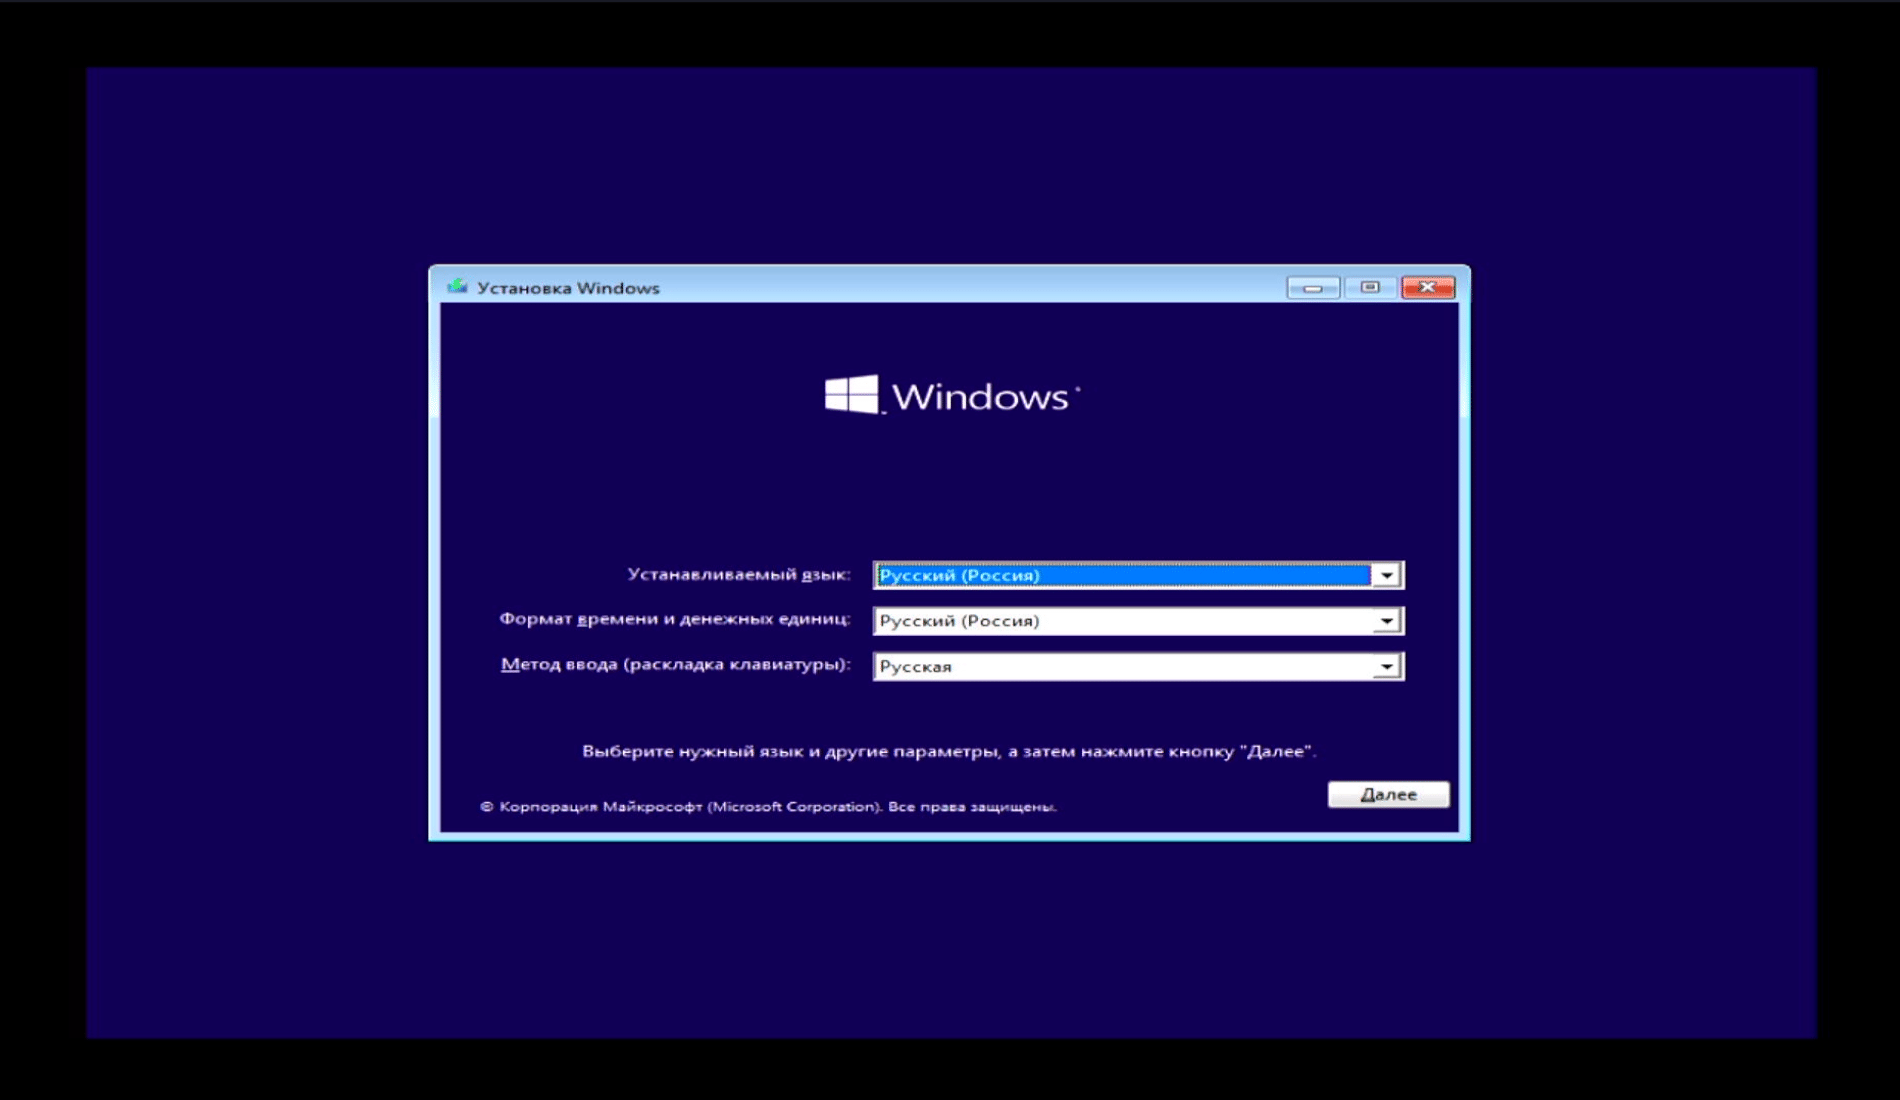 Установка Windows 10 на ASUS P6T SE проходит успешно